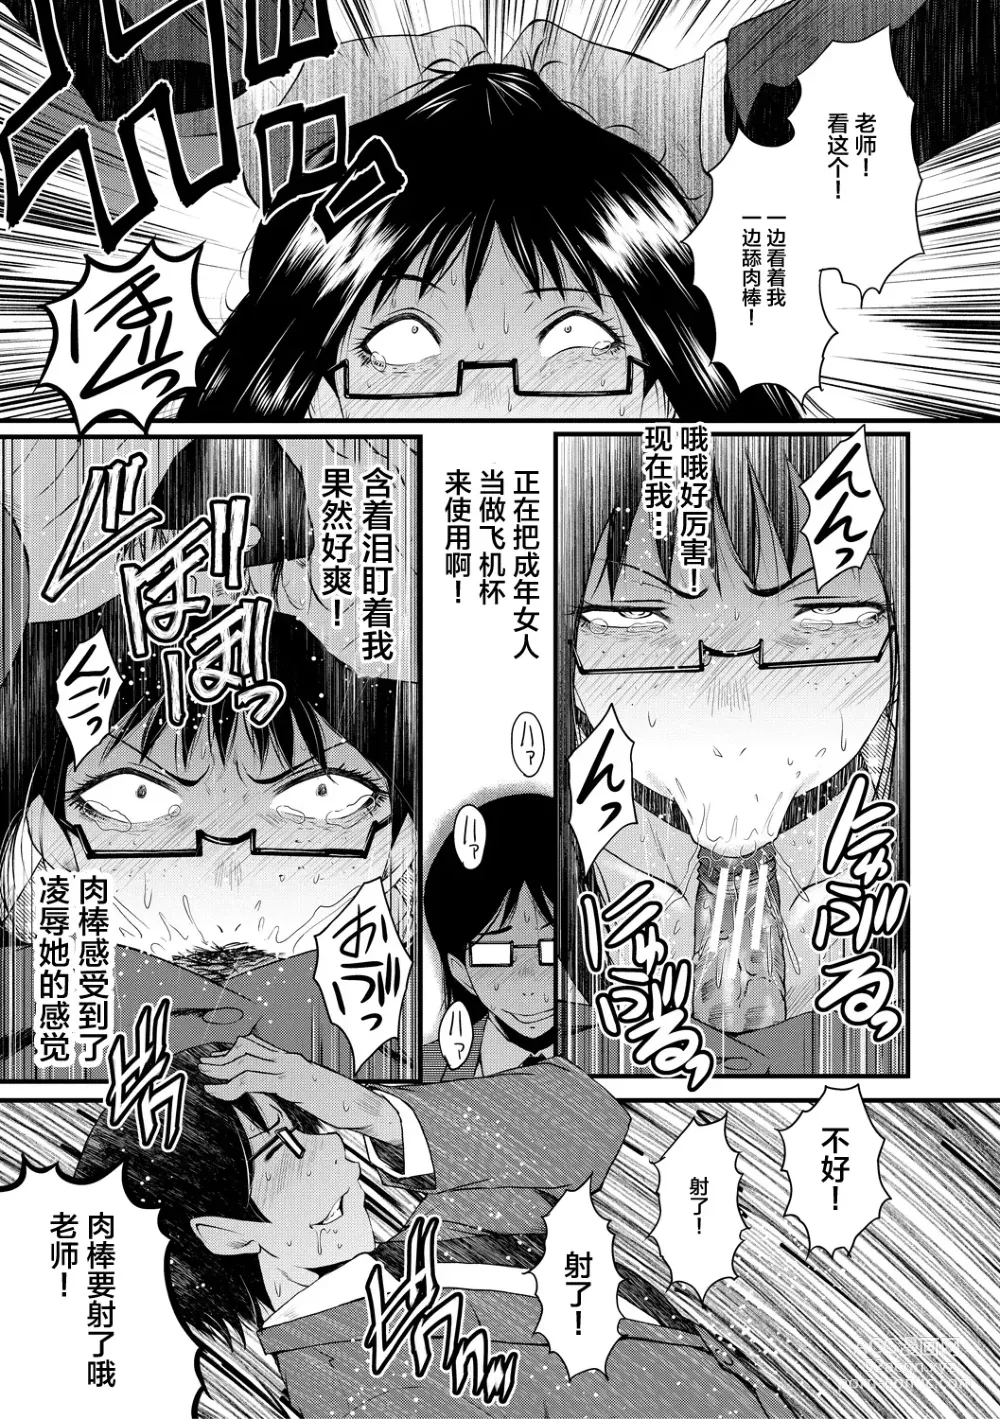 Page 29 of manga Sennou Kikan